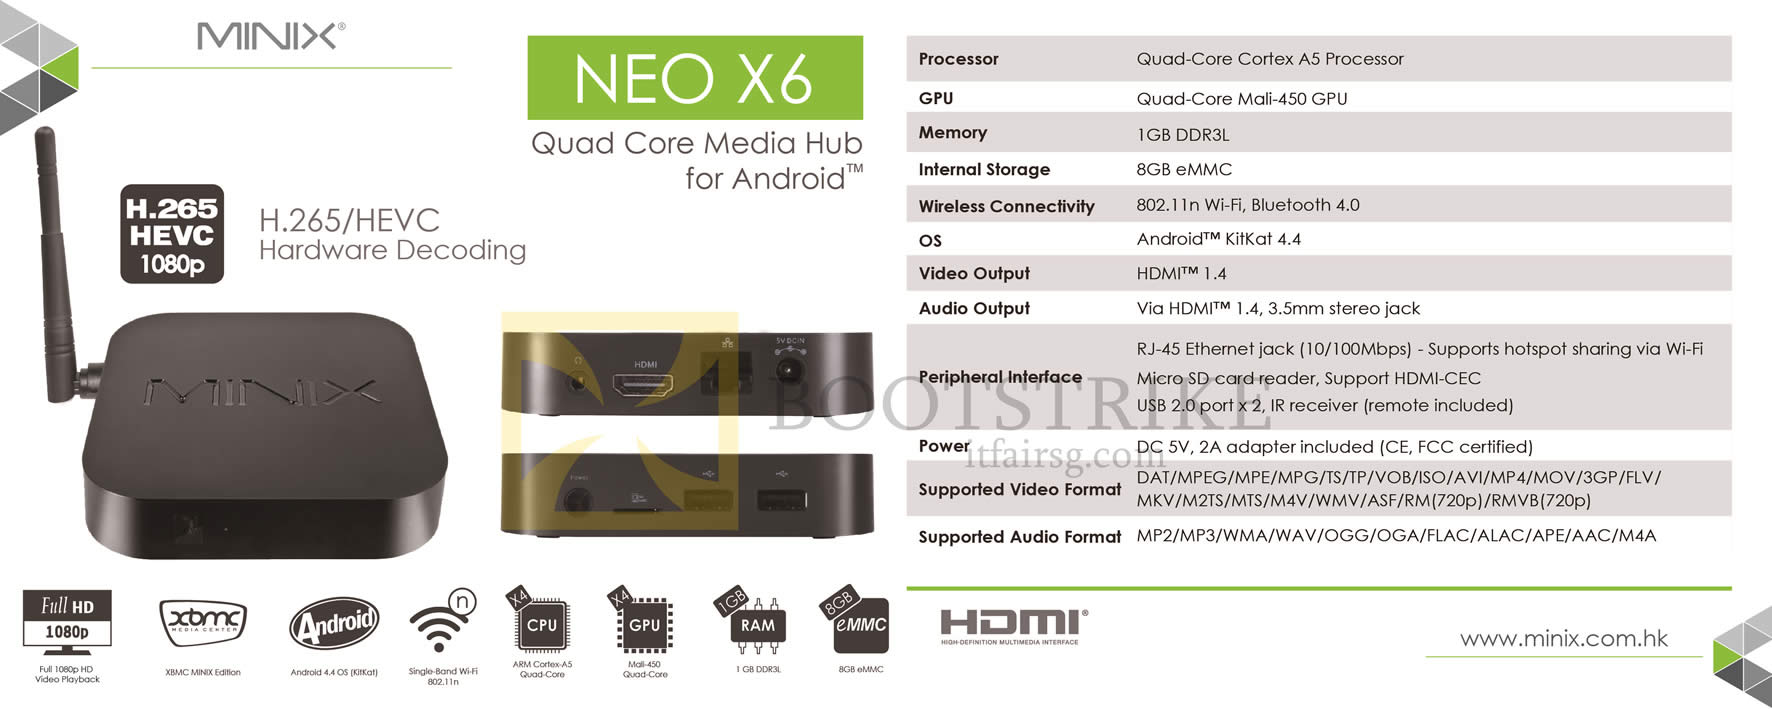 IT SHOW 2015 price list image brochure of Amconics Minix Neo X6 Media Hub Android Media Player